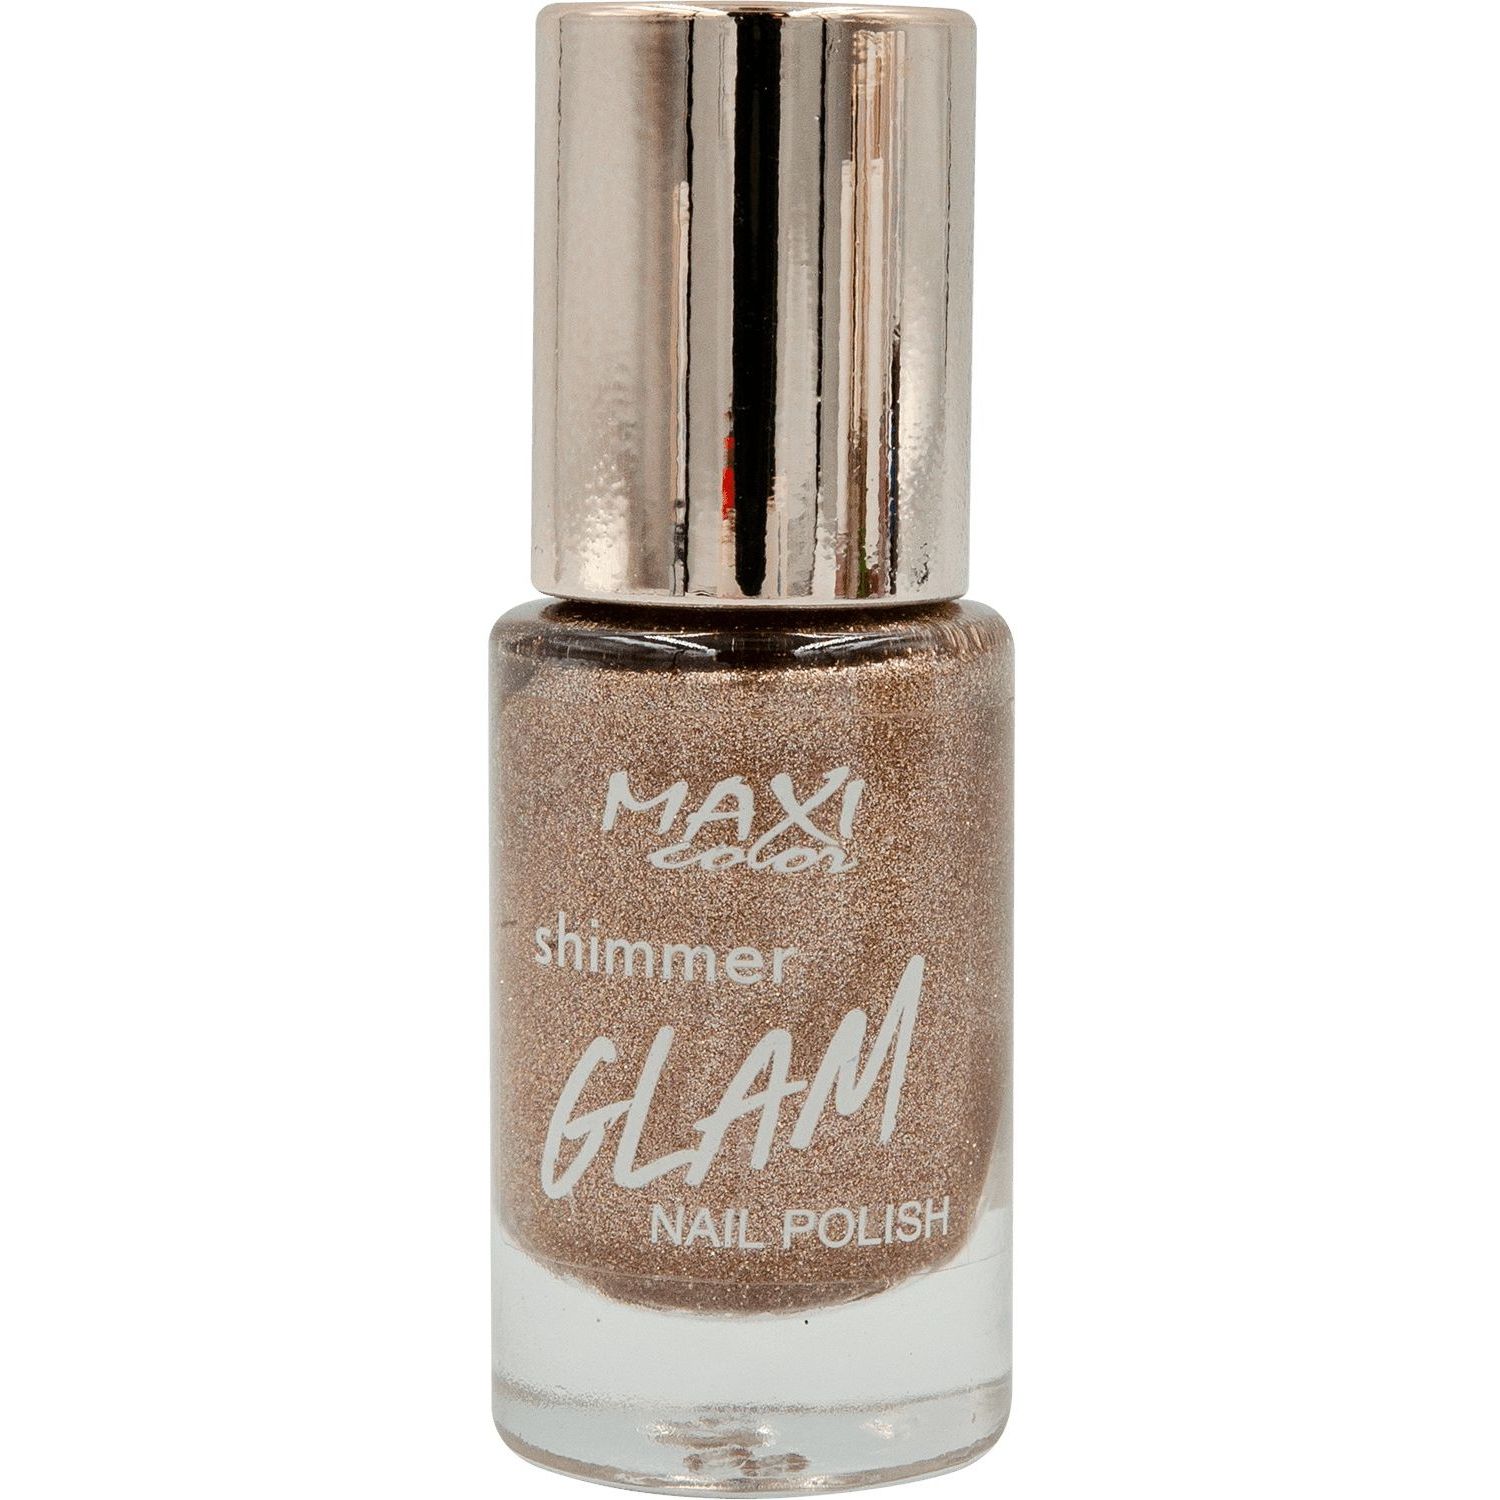 Лак для ногтей Maxi Color Shimmer Glam тон 02, 10 мл - фото 1